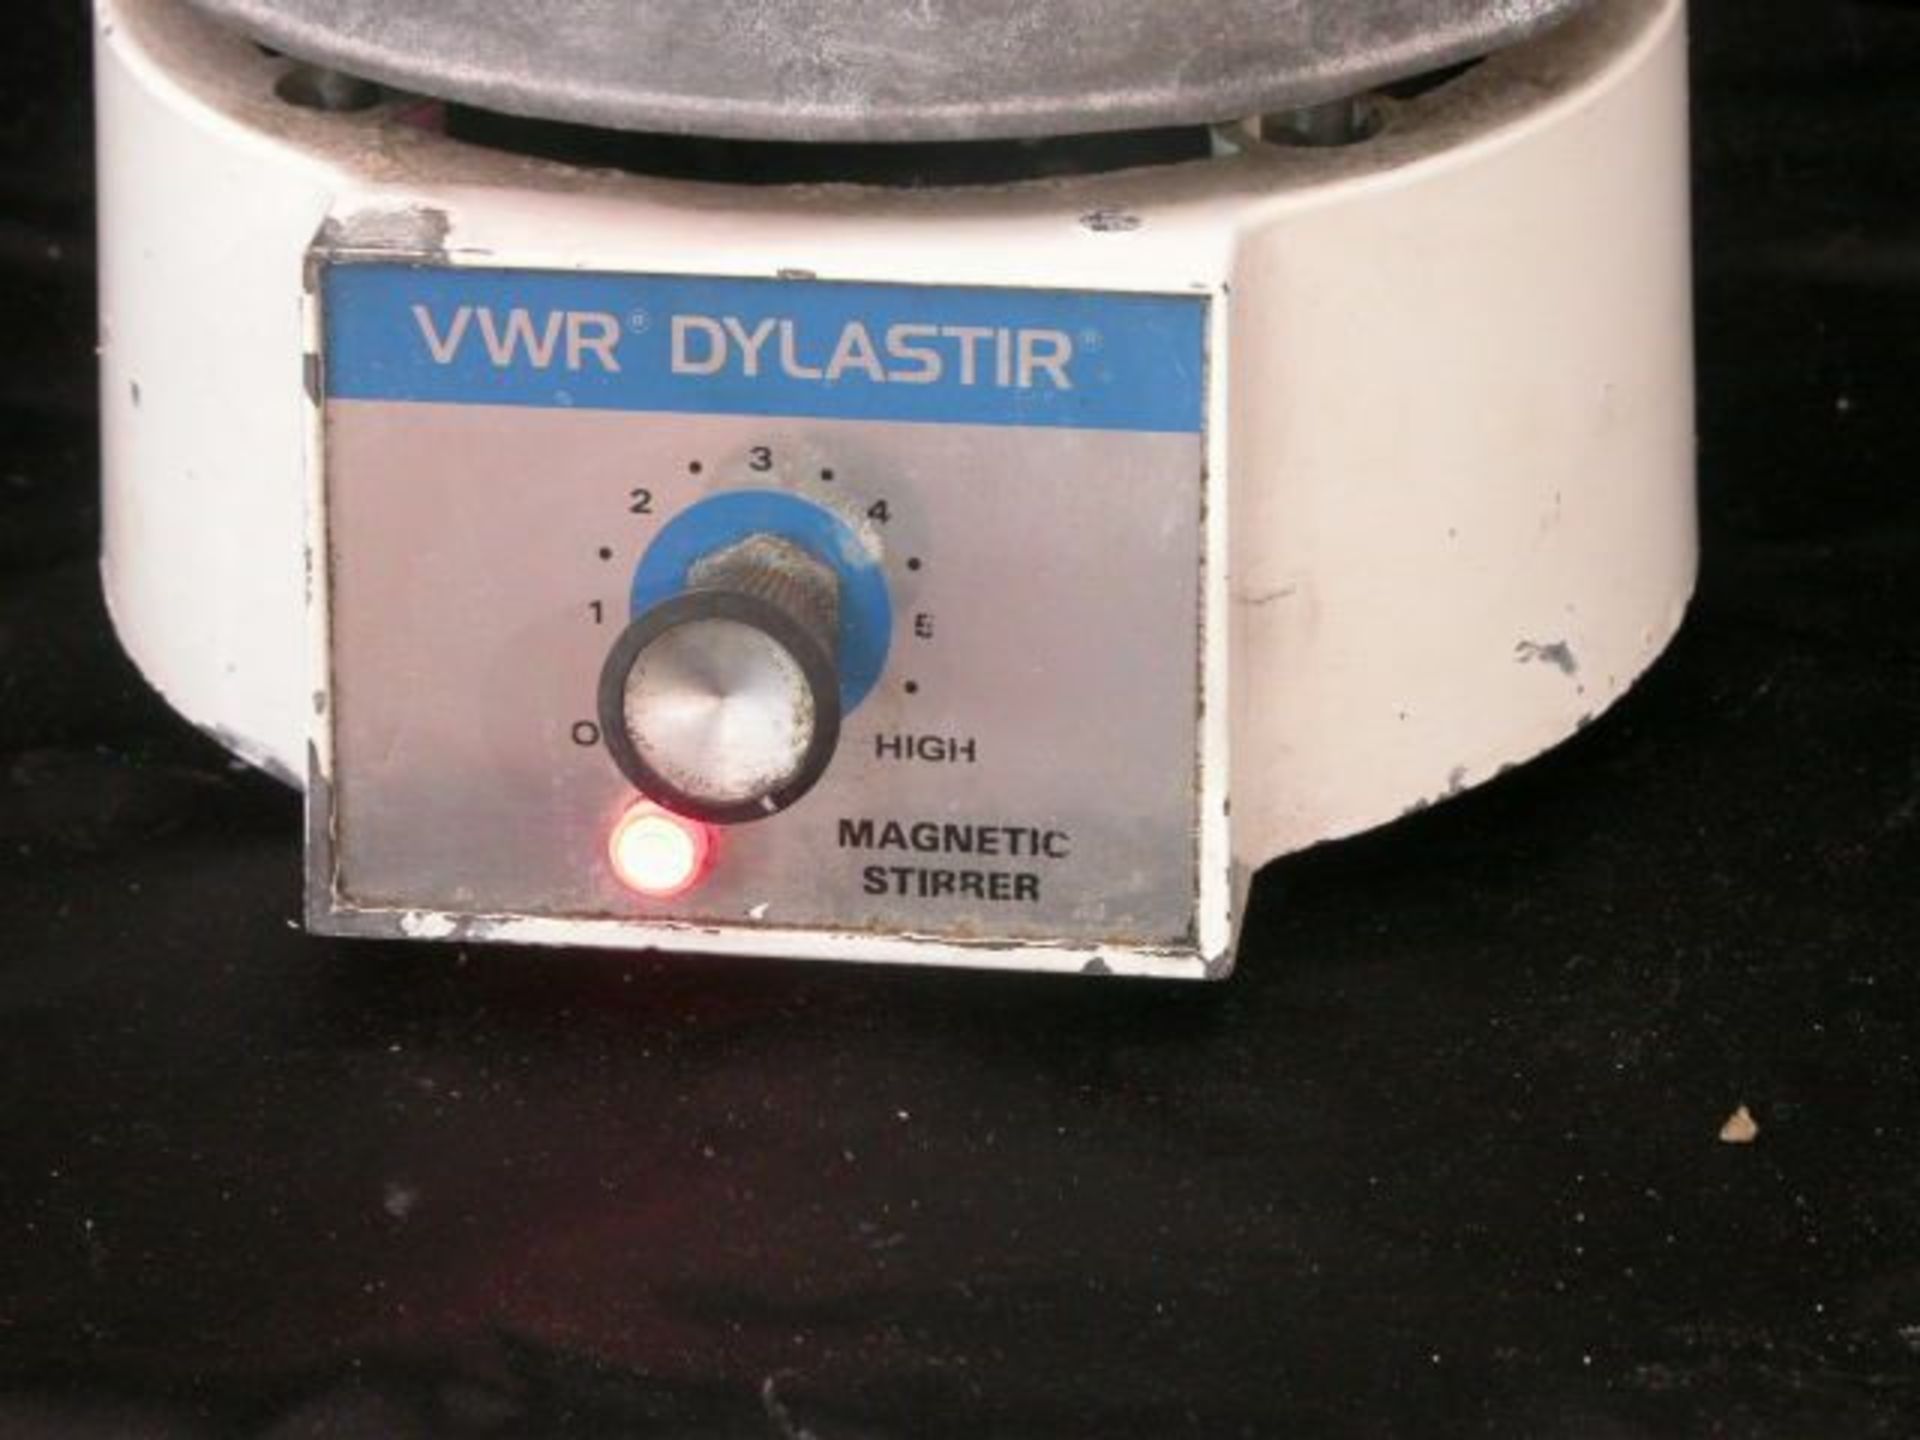 VWR Dylastir 6.5" Diameter Lab 1500 ML 100 - 1200 RPM Mixer / Stirrer, Qty 1, 331267307897 - Image 2 of 3